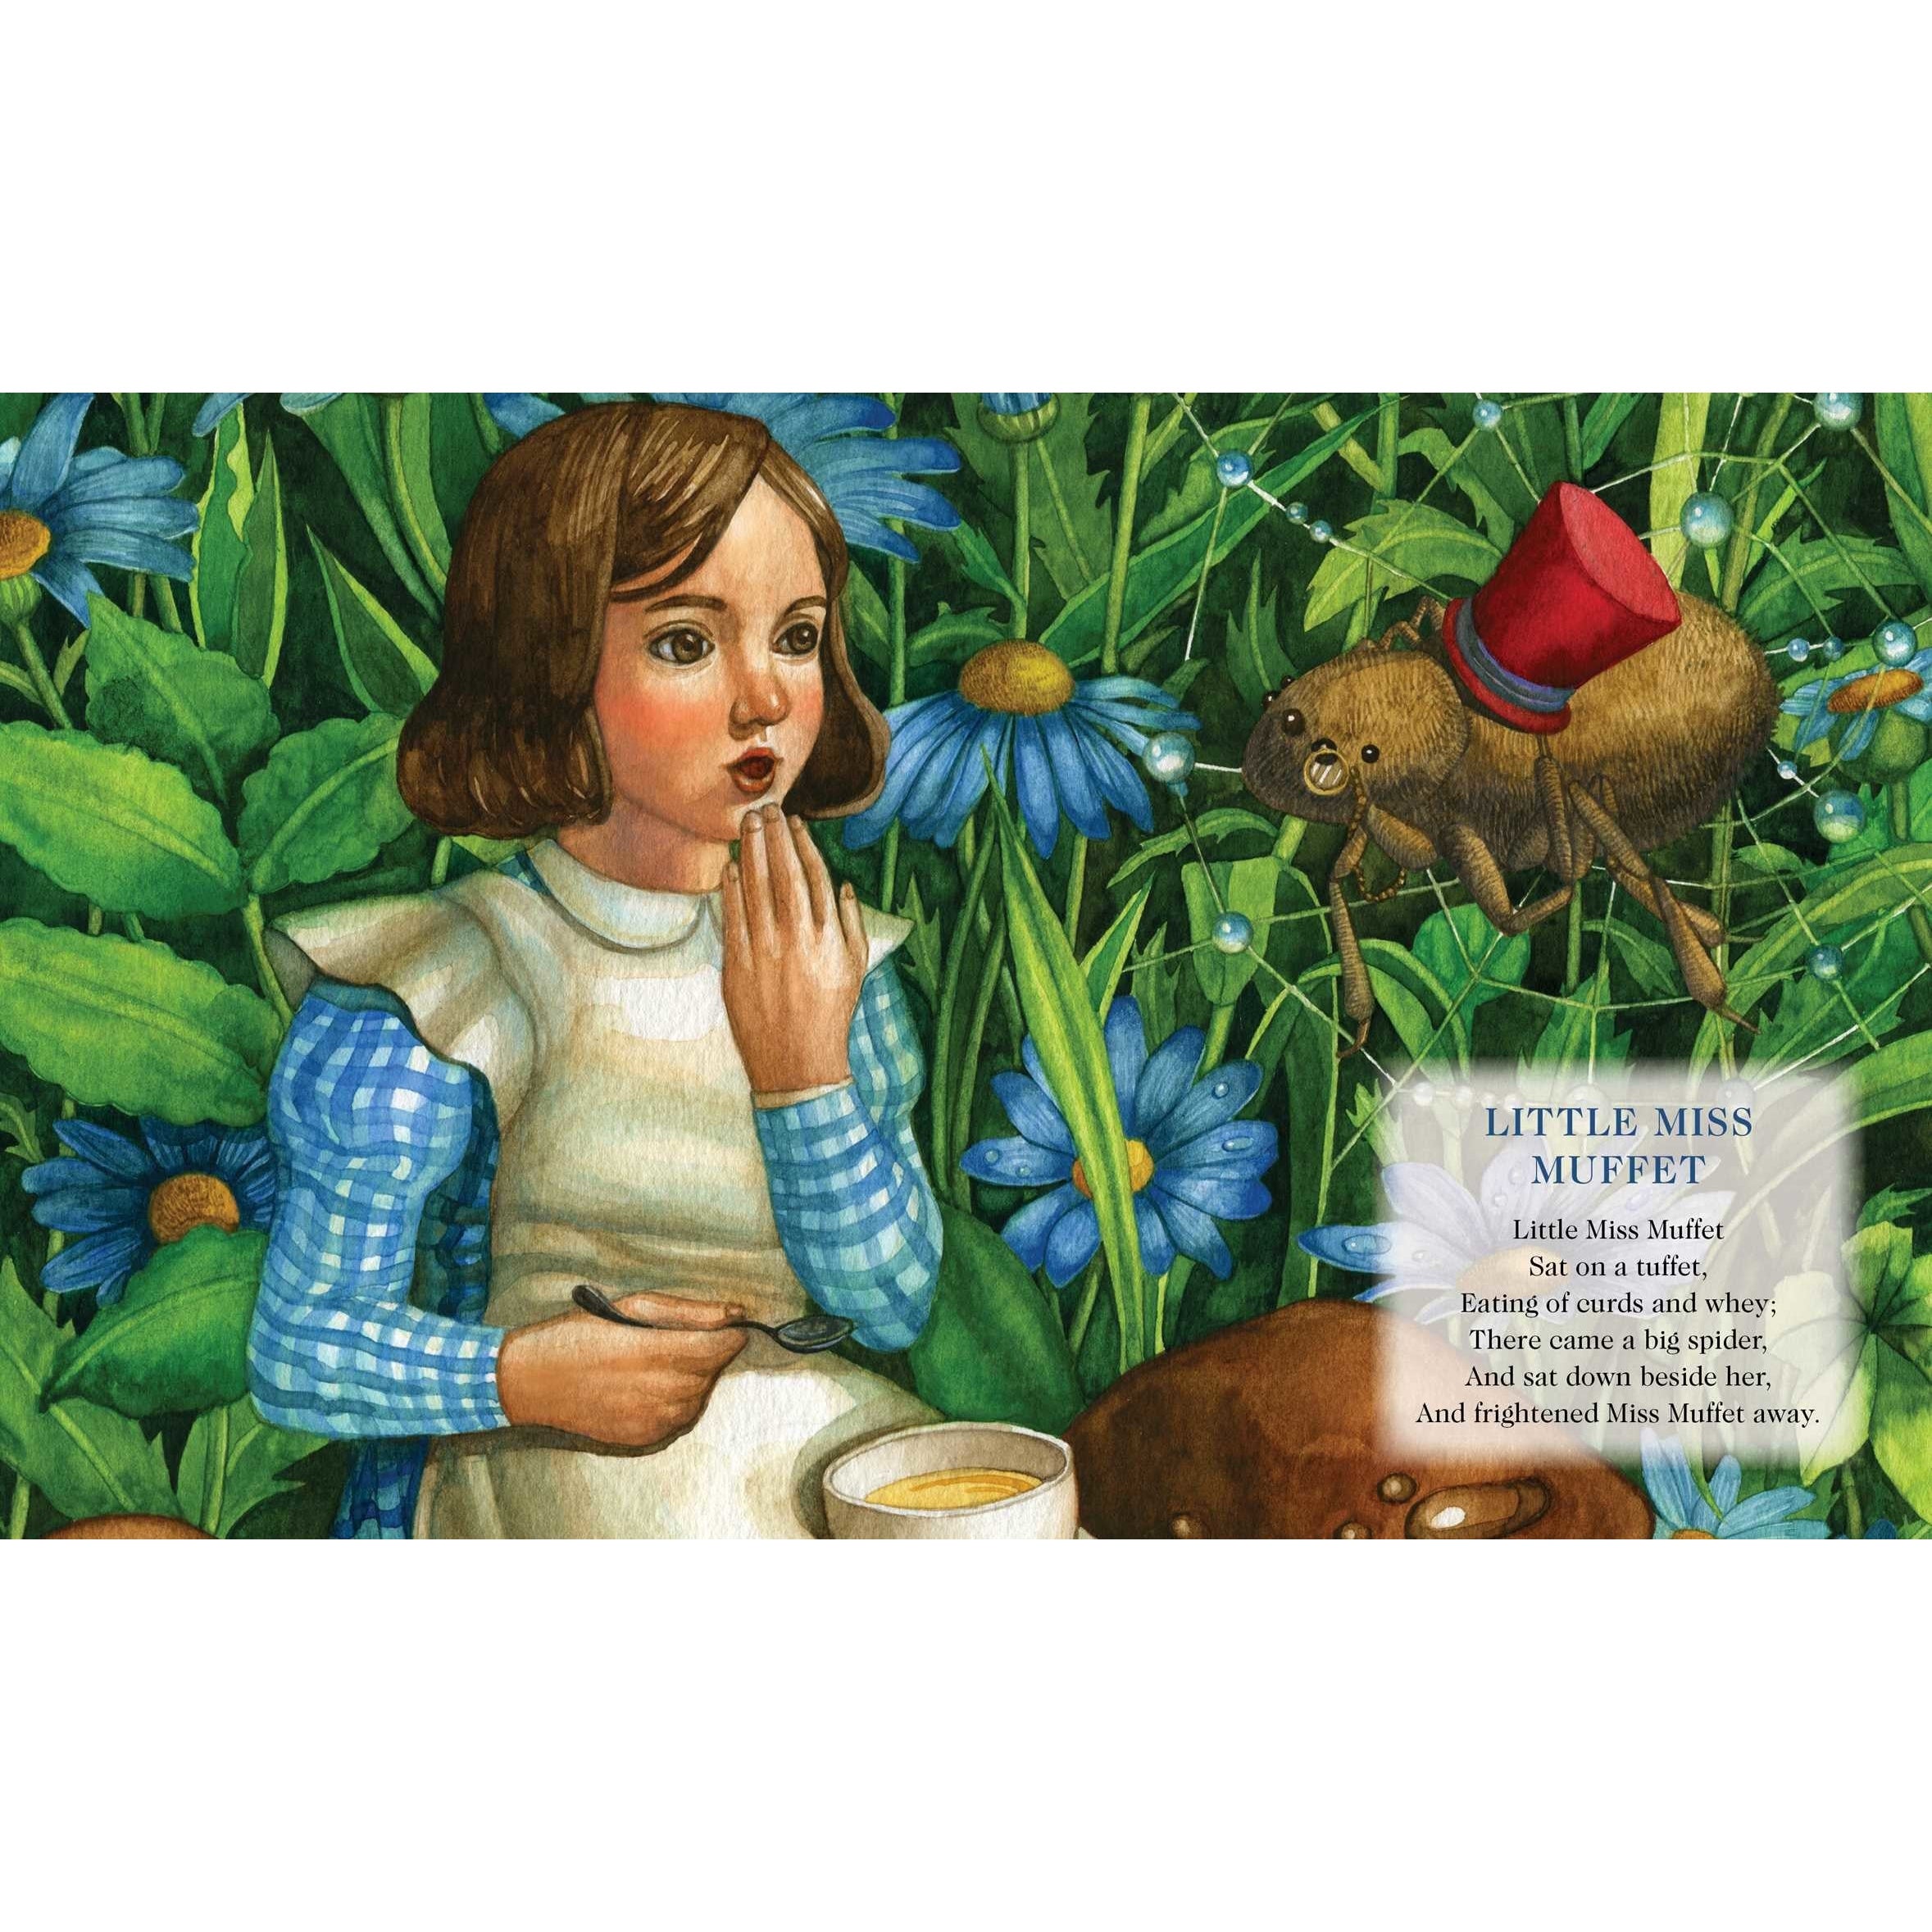 Simon & Schuster: More Mother Goose Nursery Rhymes (Hardcover Book)-SIMON & SCHUSTER-Little Giant Kidz